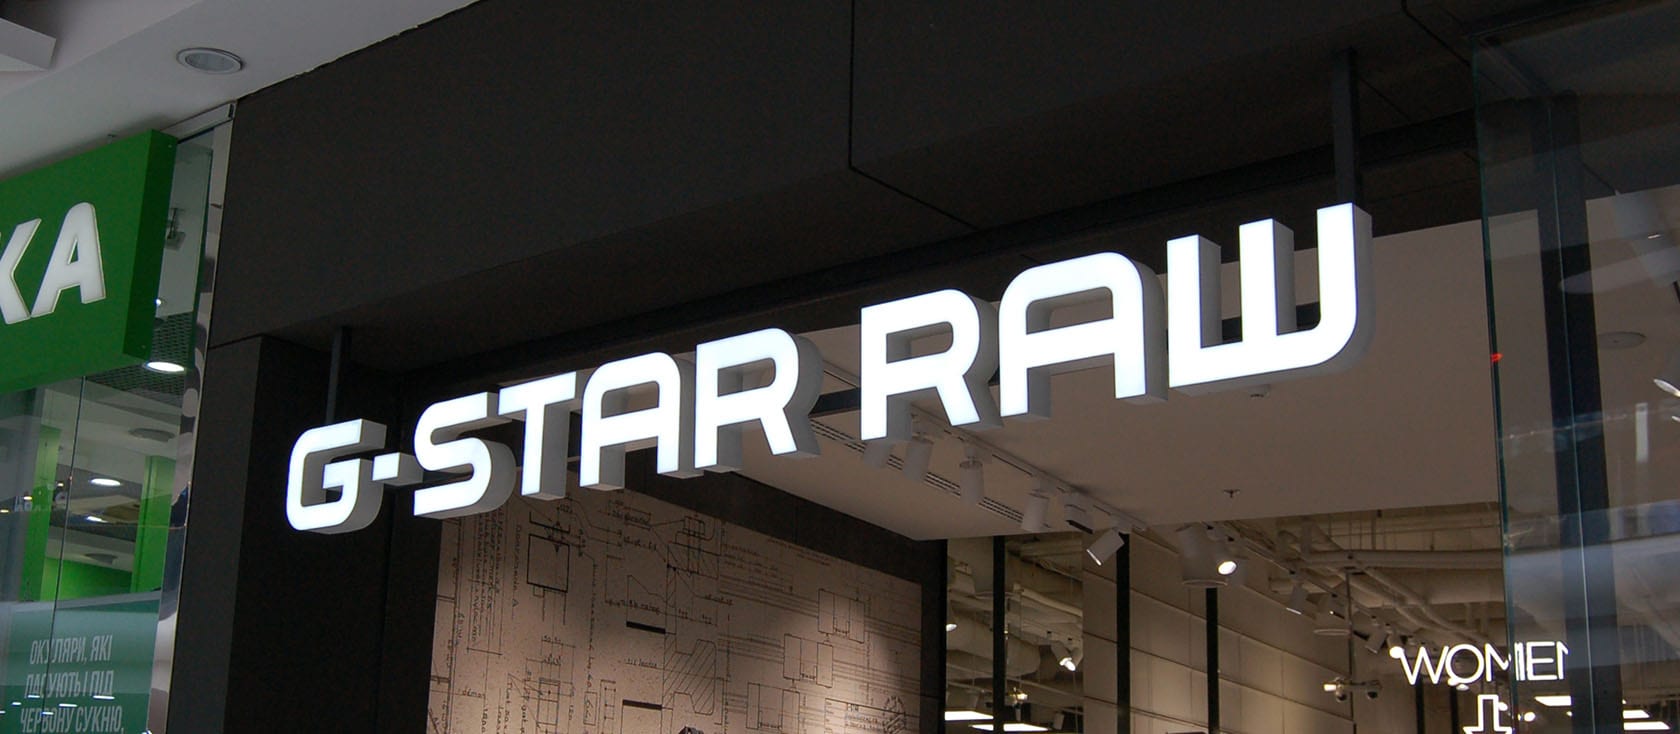 interior-mall-sign